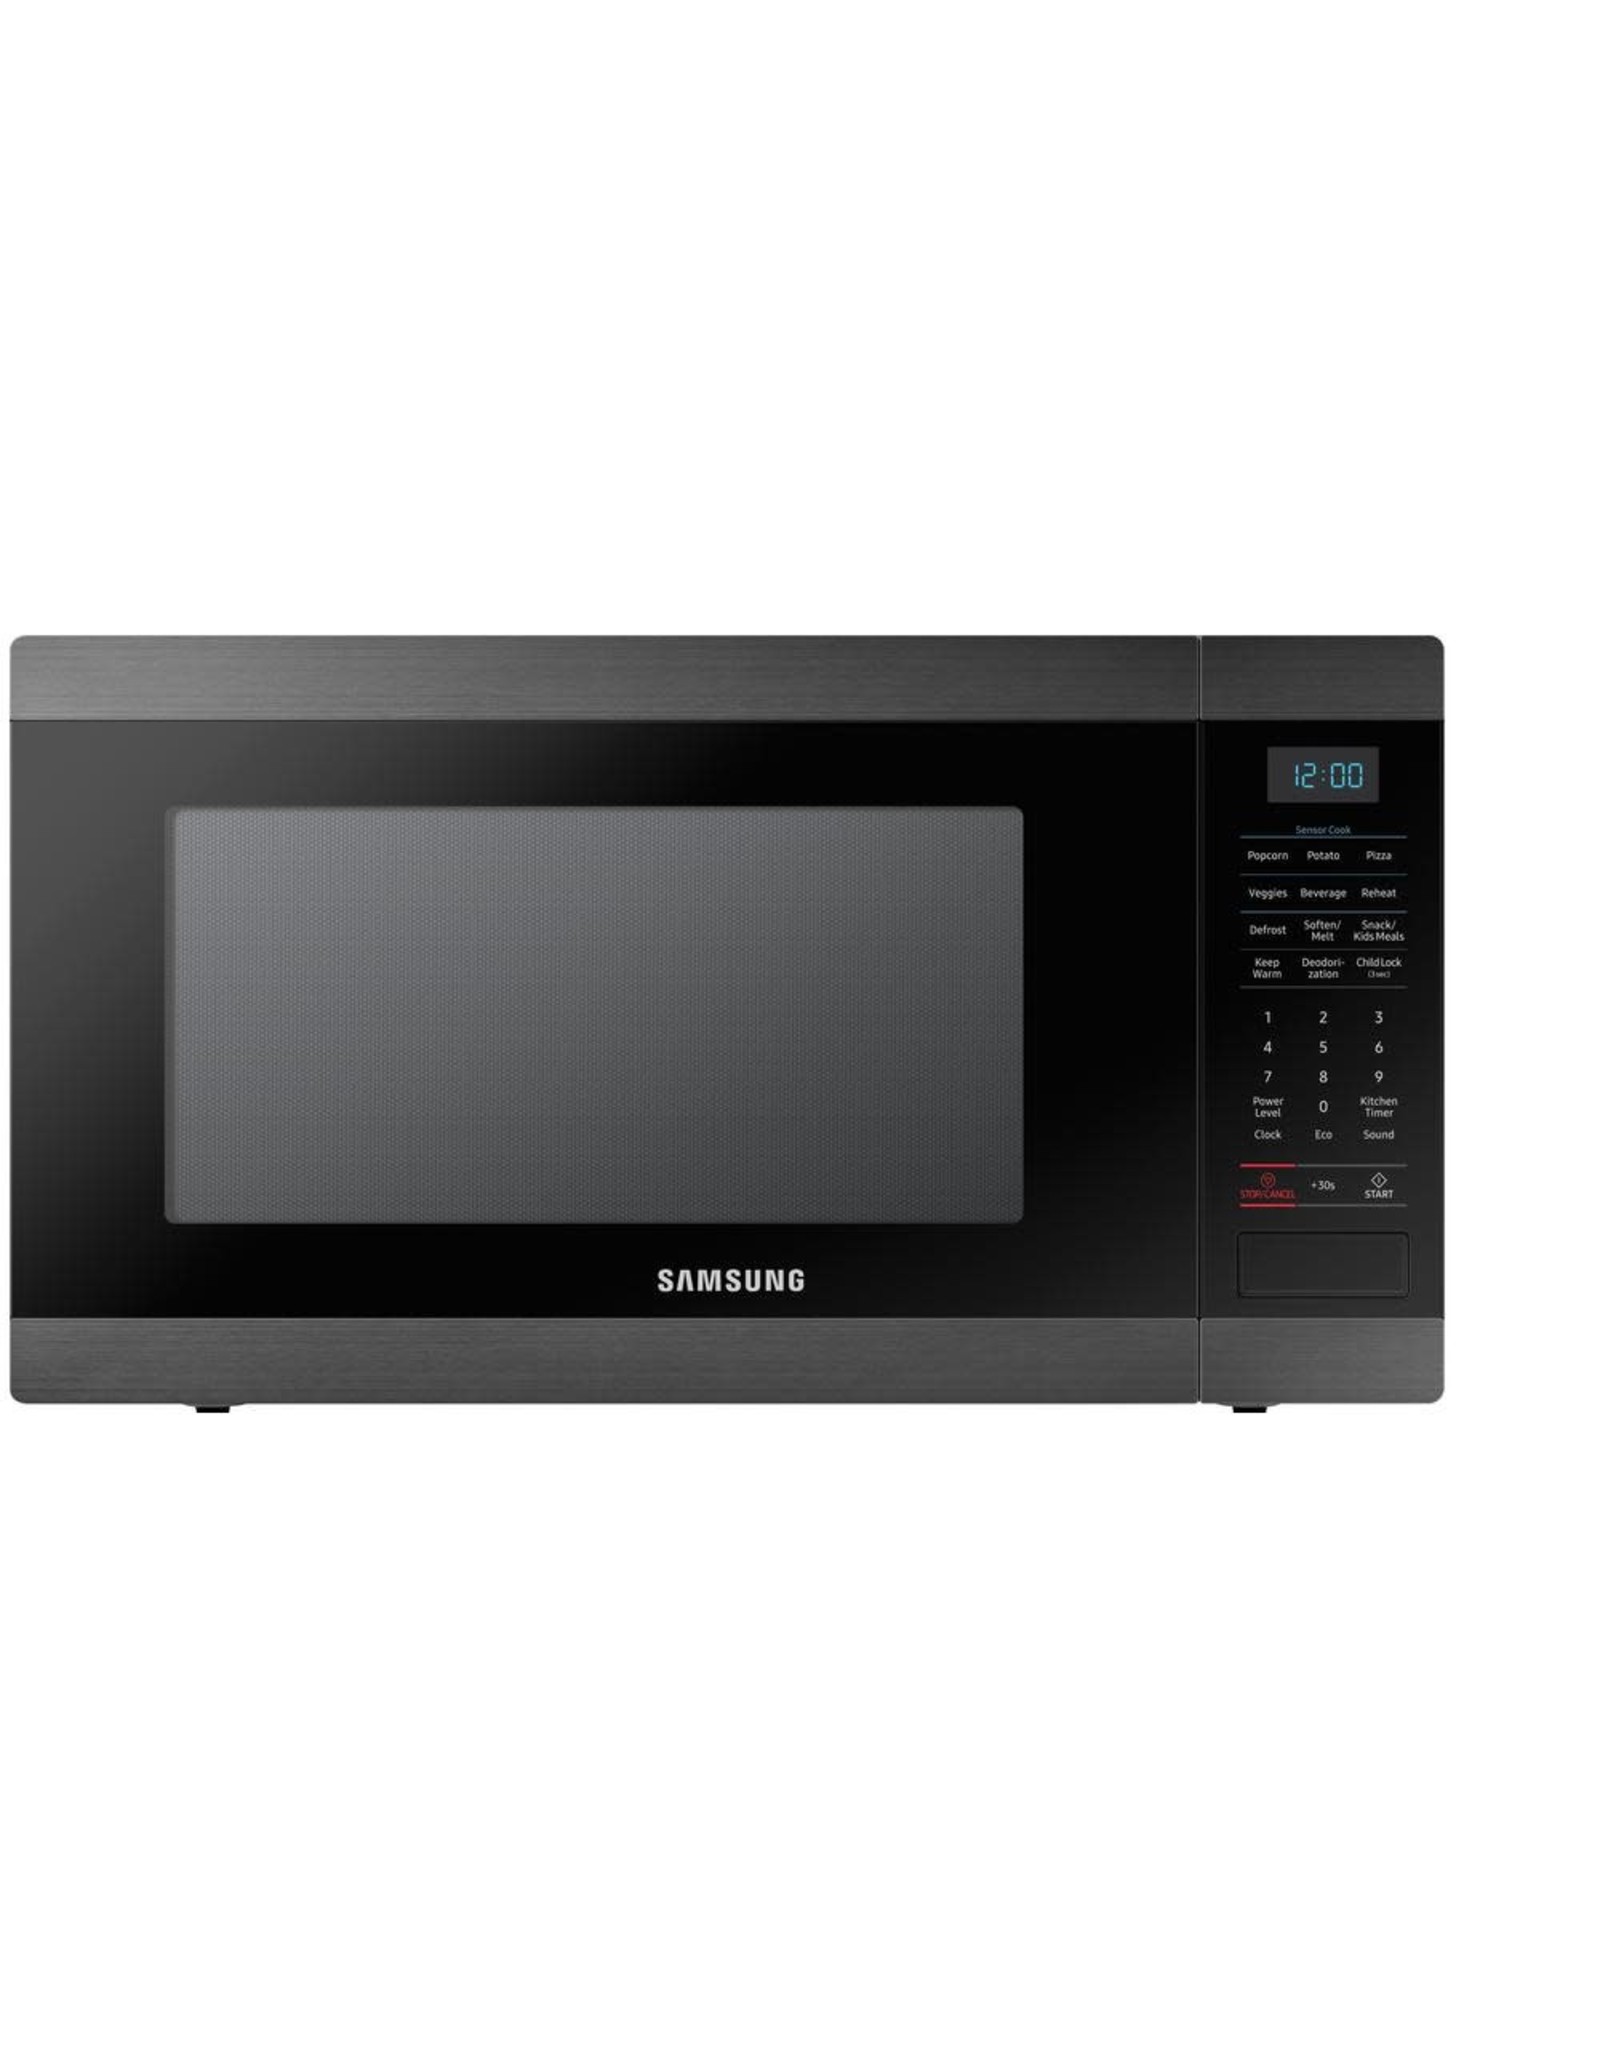 MS19M8000AG Samsung Counter Top Microwave; 1.9 cu ft Large Capacity; Ceramic Enamel Interior